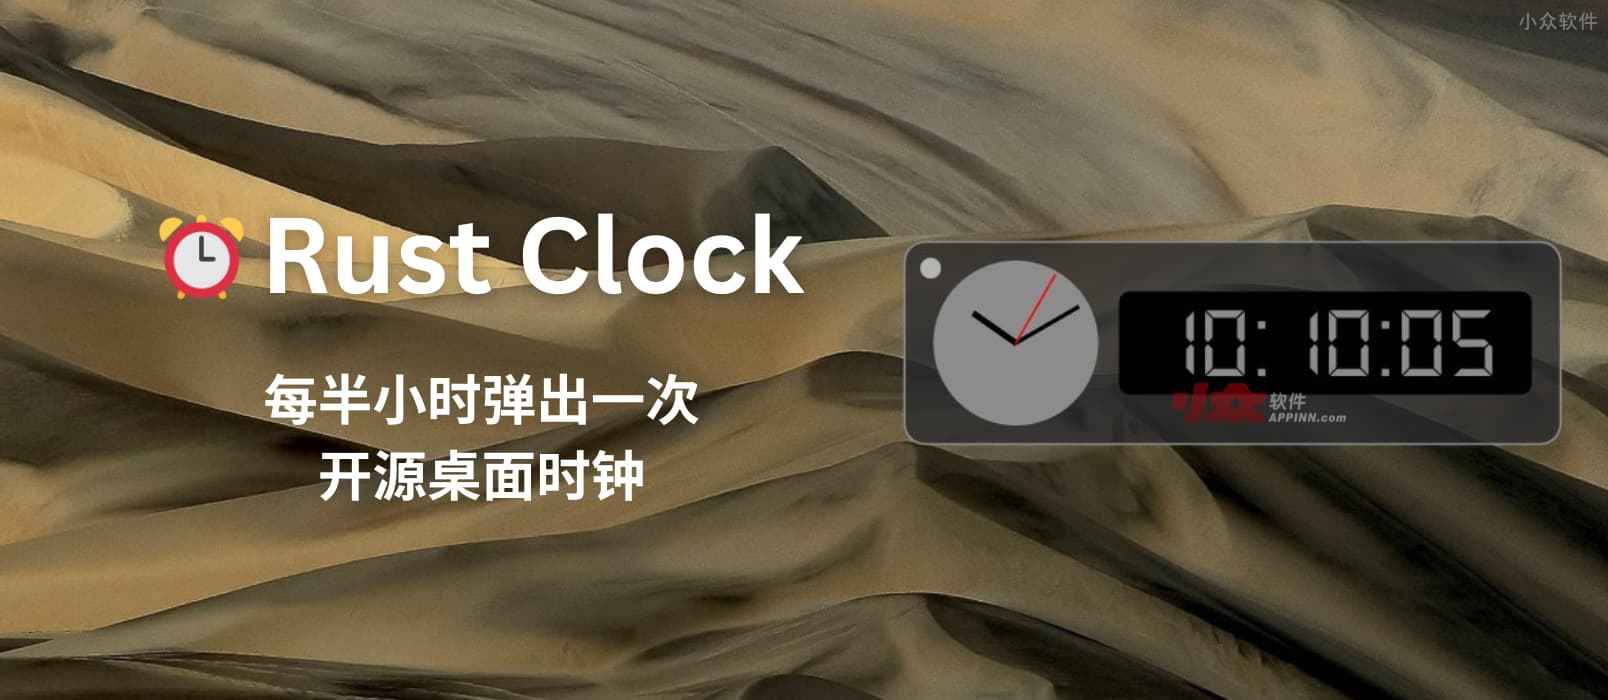 Rust Clock – 每半小时弹出一次的开源桌面时钟，类似超级小桀那种[Windows/macOS]